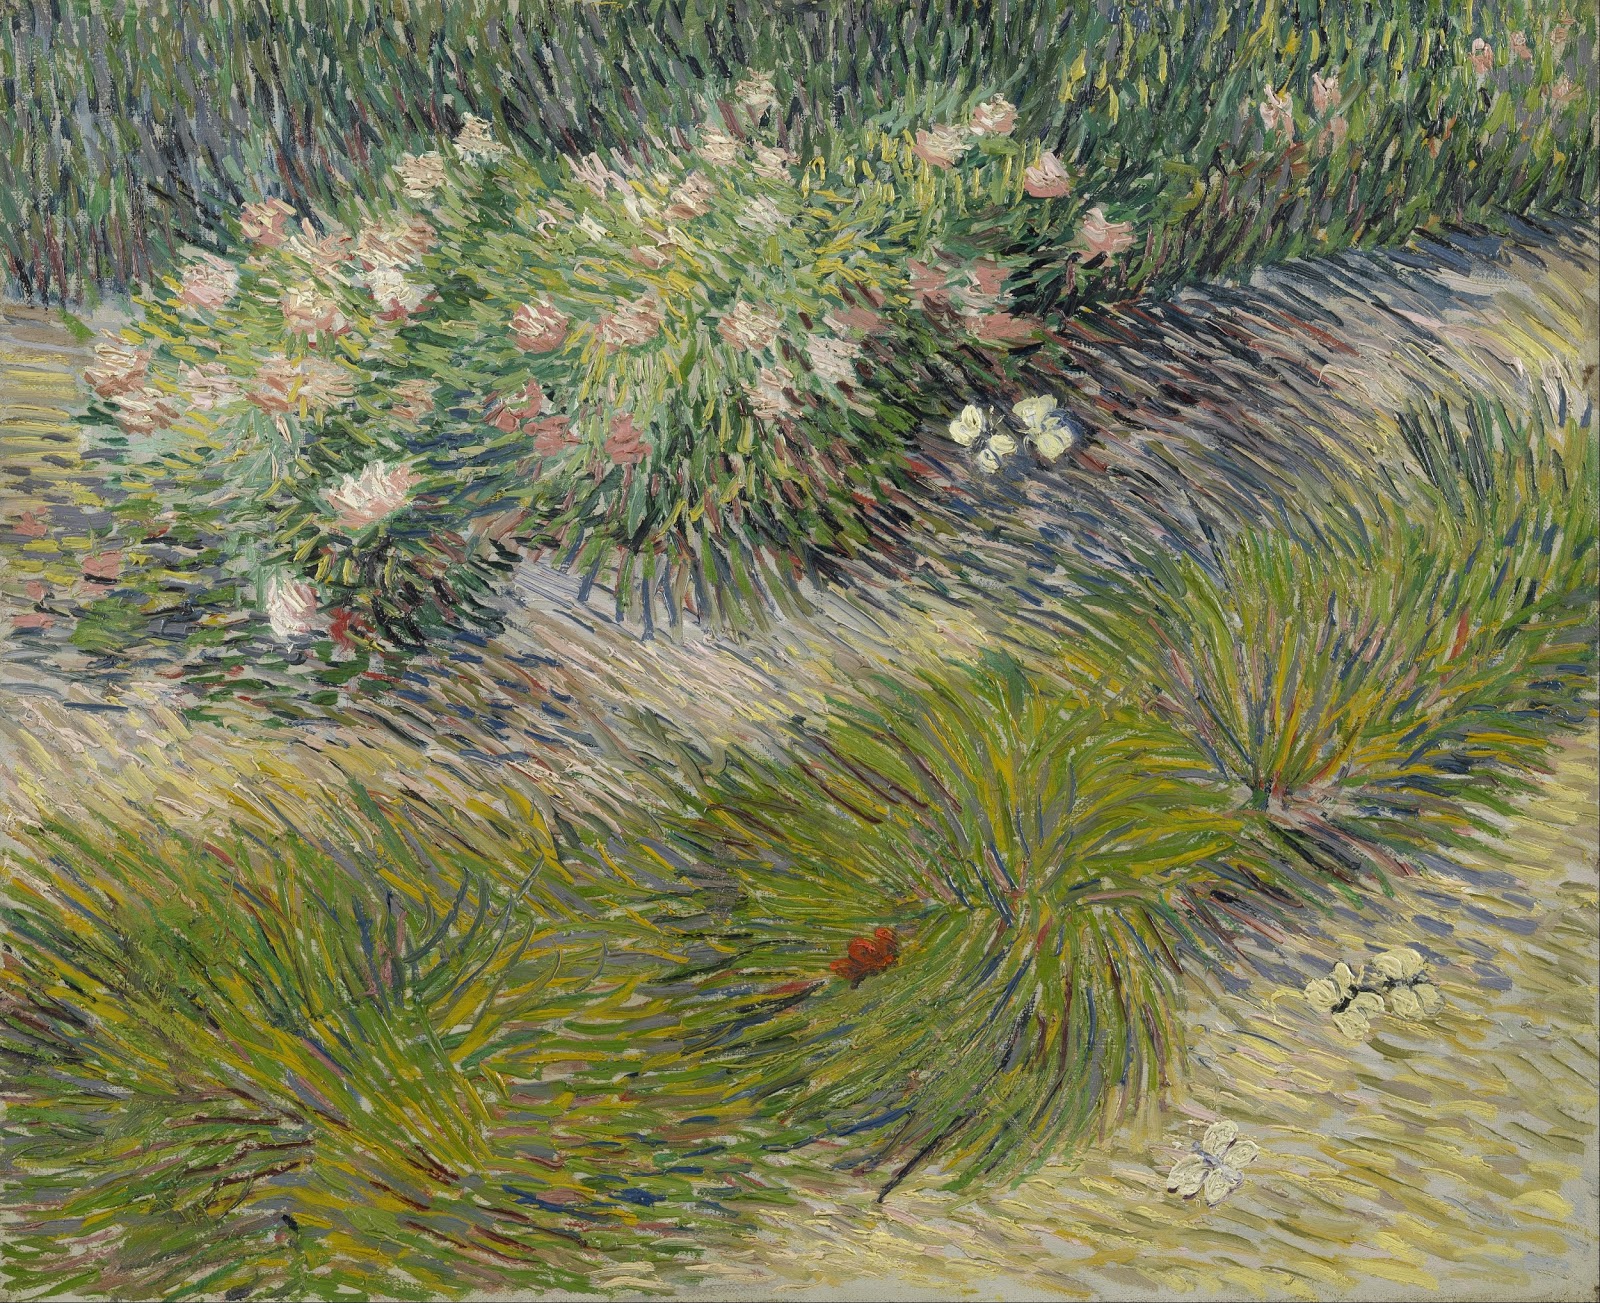 Vincent+Van+Gogh-1853-1890 (488).jpg